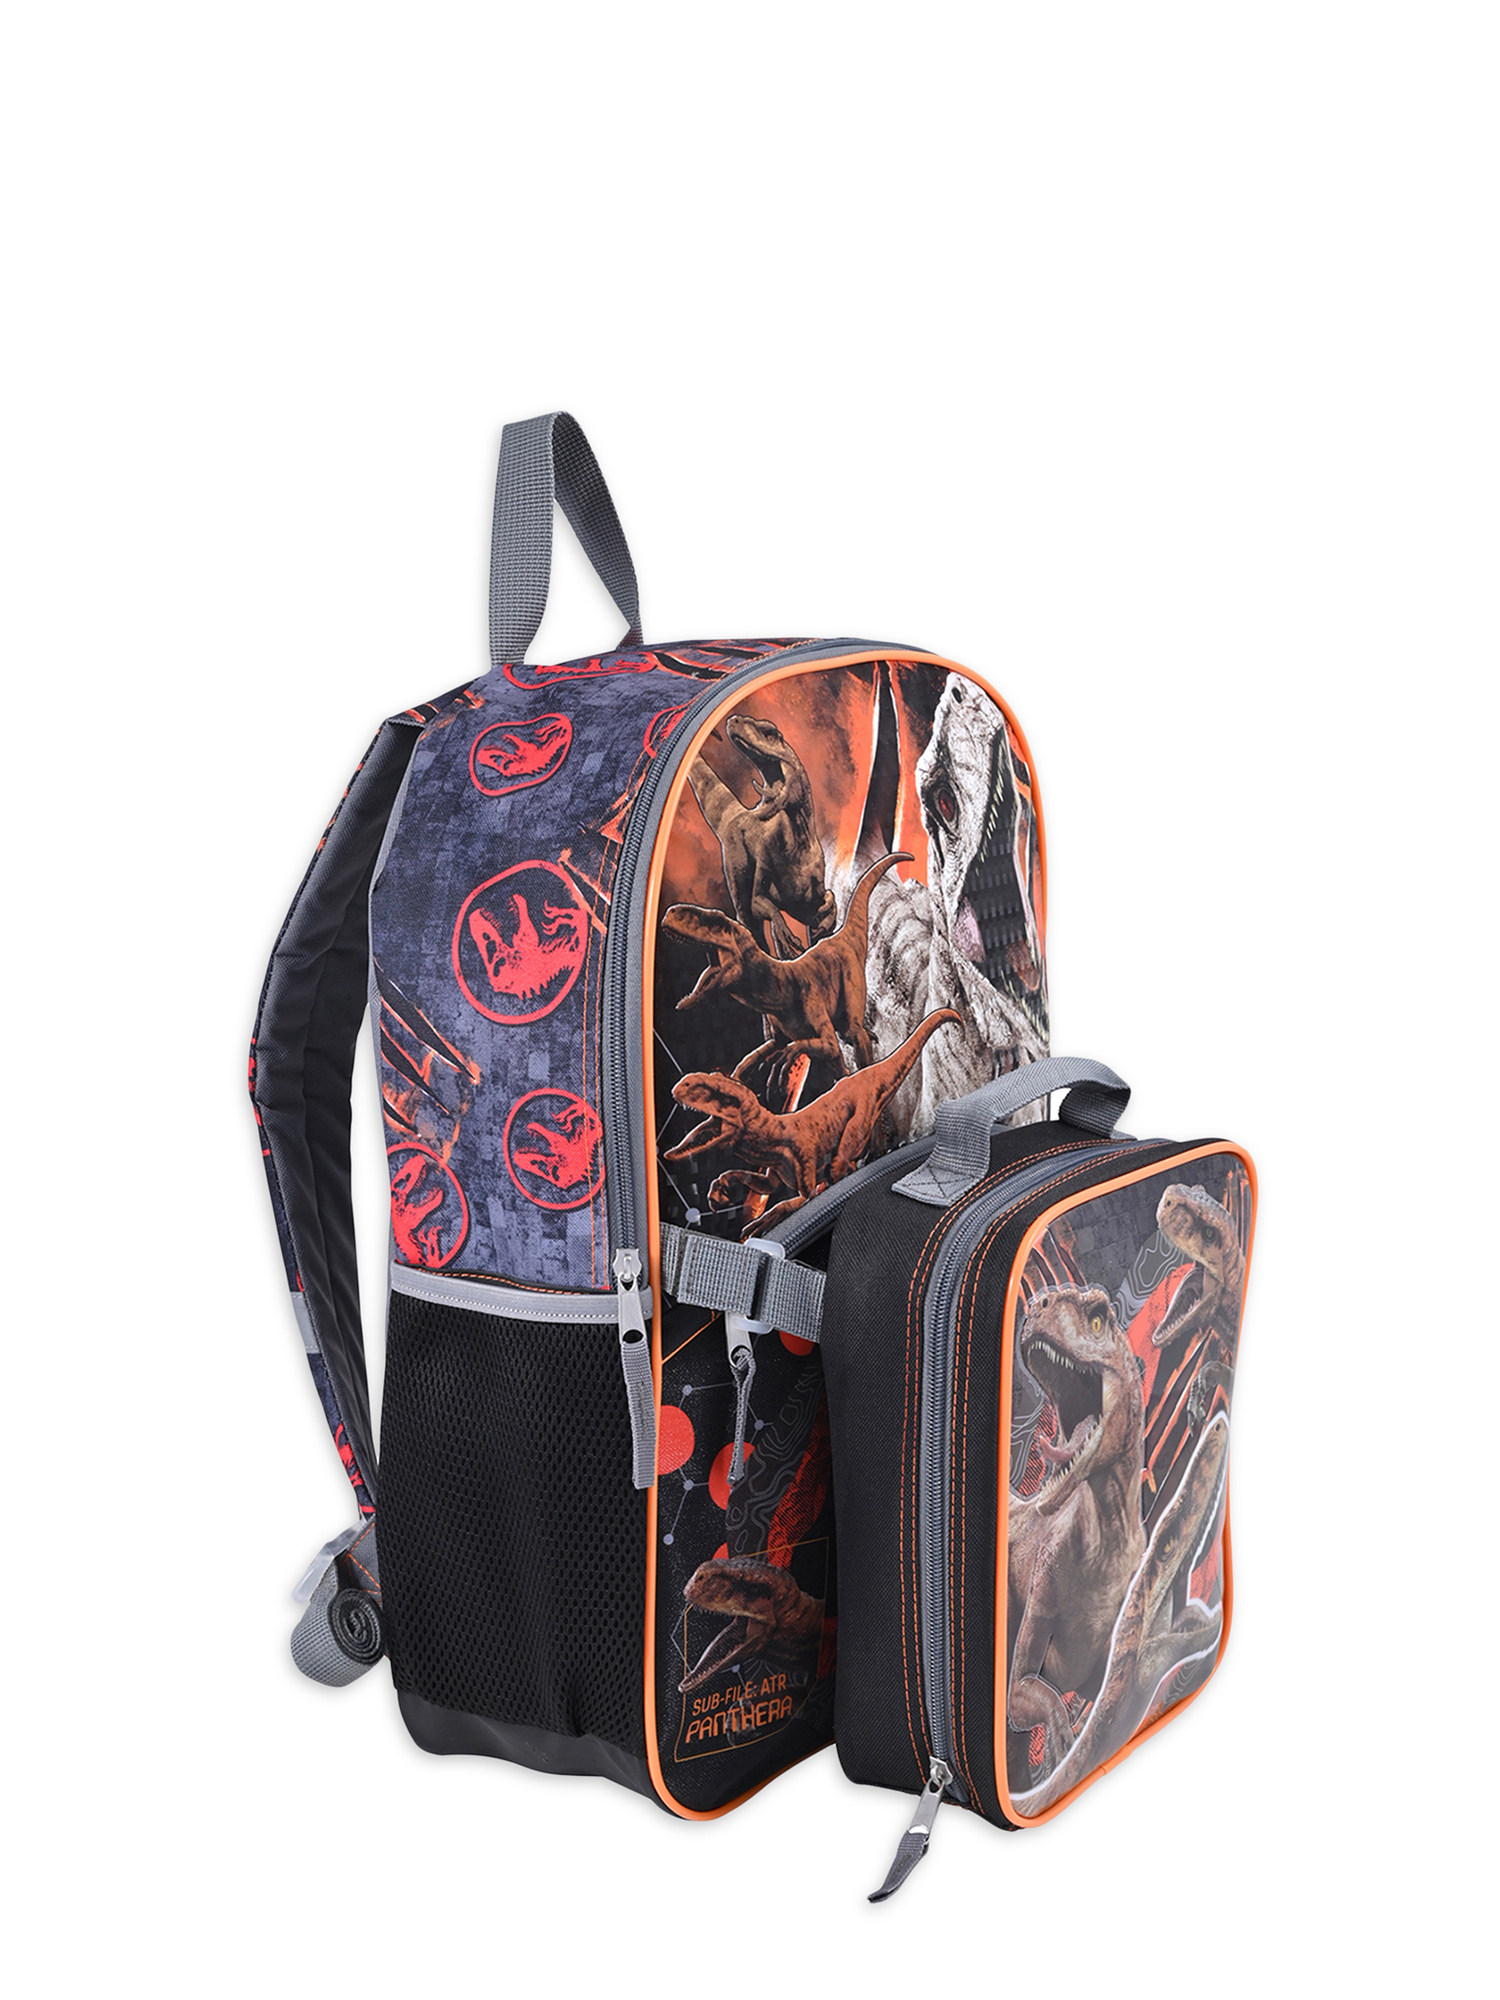 Universal Jurassic World Boys 17" Laptop Backpack 2-Piece Set with Lunch Bag, Black Orange - image 2 of 9